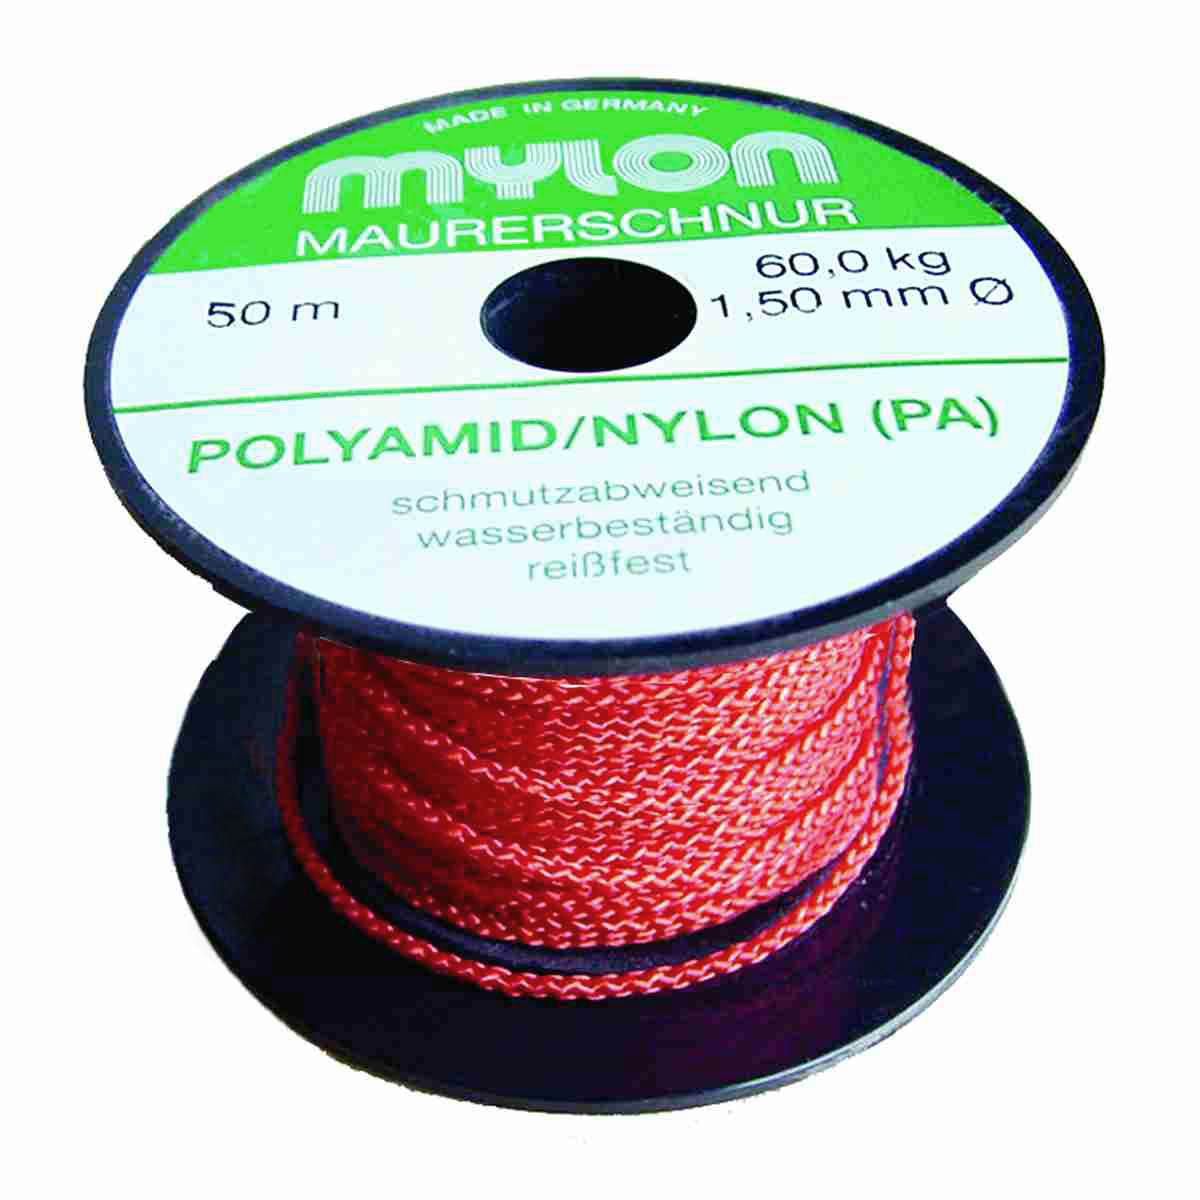 Lotschnur aus Polyamid/Nylon, rot Länge 50 m, Ø 1,7 mm, Reißkraft 60 kg